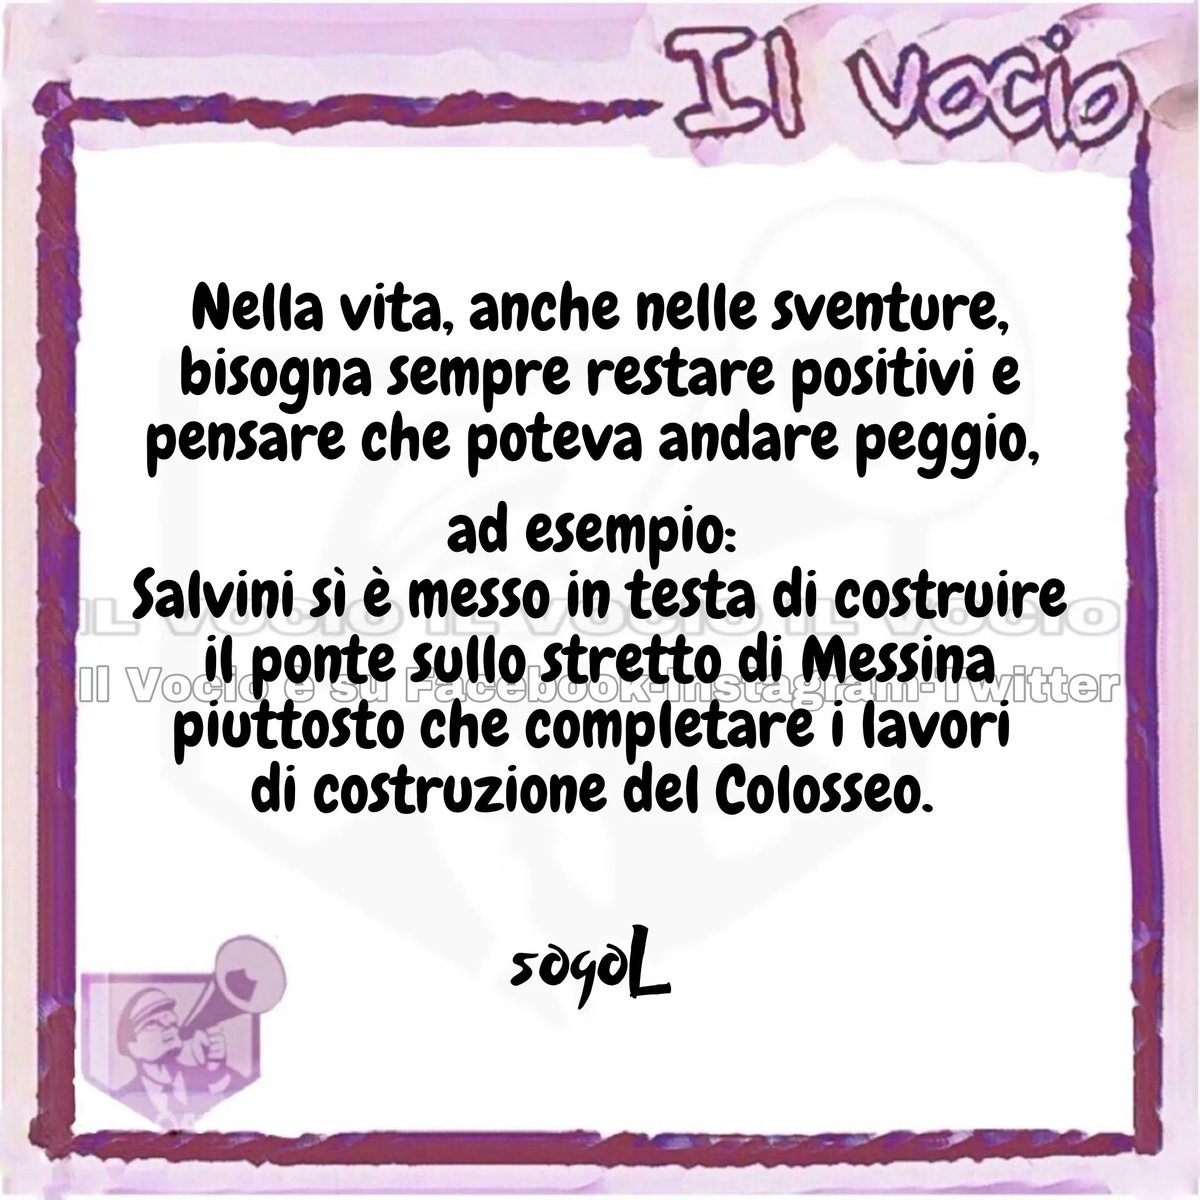 sogoL @rosarioartesi #6settembre #ilvocio #Salvini #infrastrutture #pontediMessina #sventura #positivitá #menopeggio #governomeloni